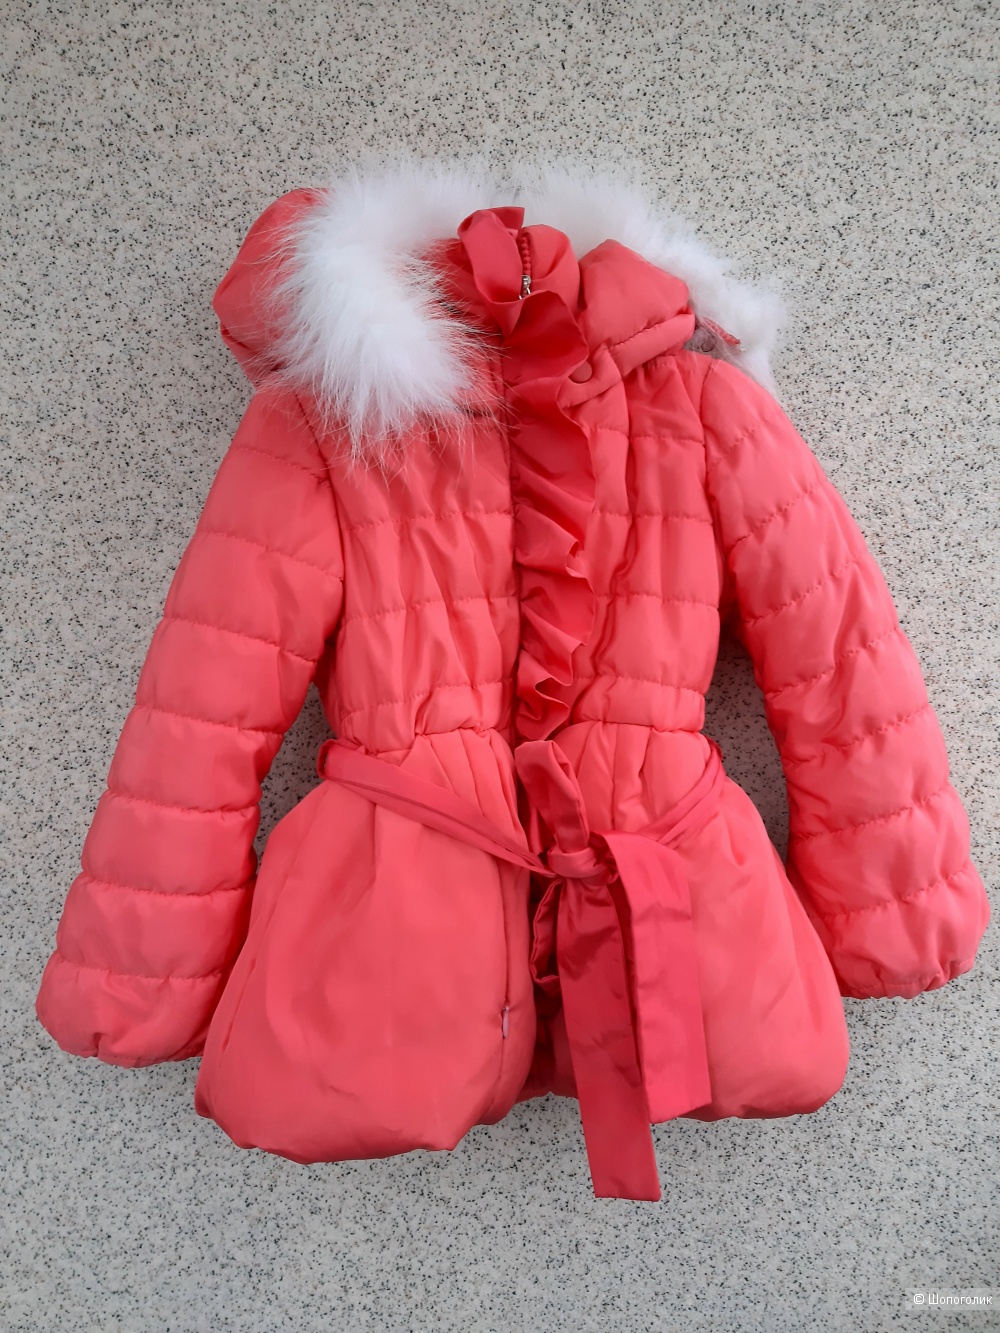 Куртка зимняя Stilnyashka, 110